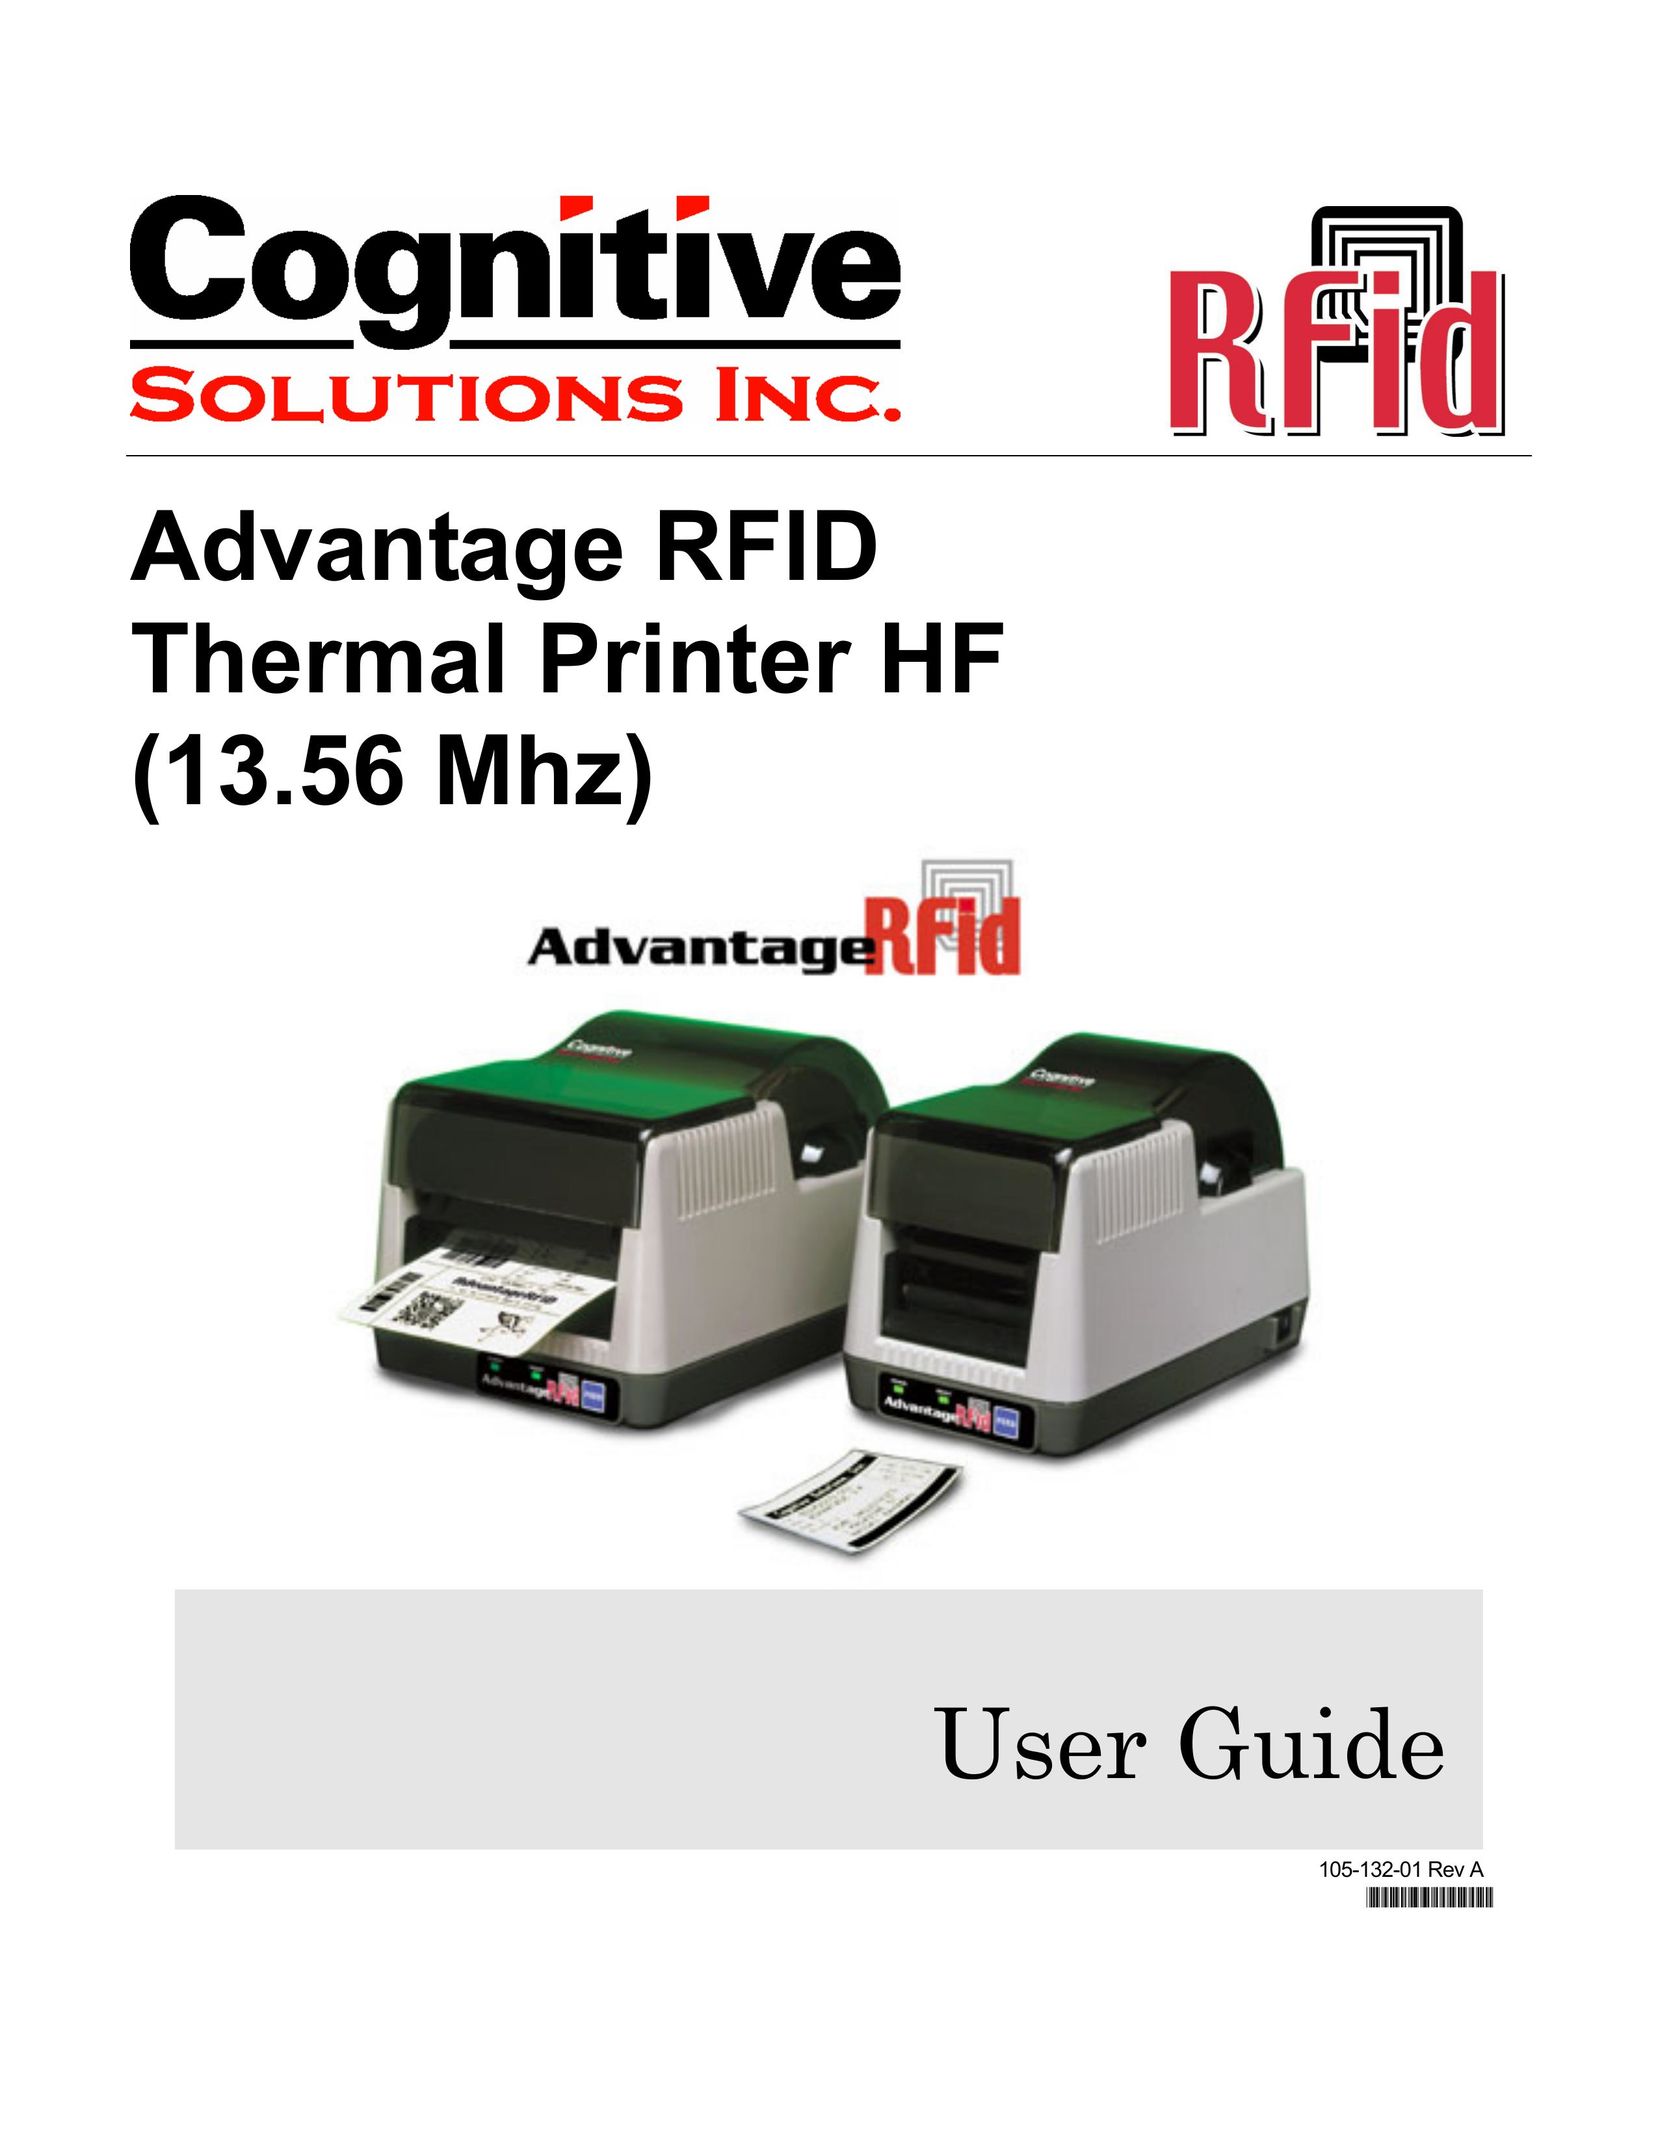 Cognitive Solutions Advantage RFID Thermal Printer Printer User Manual